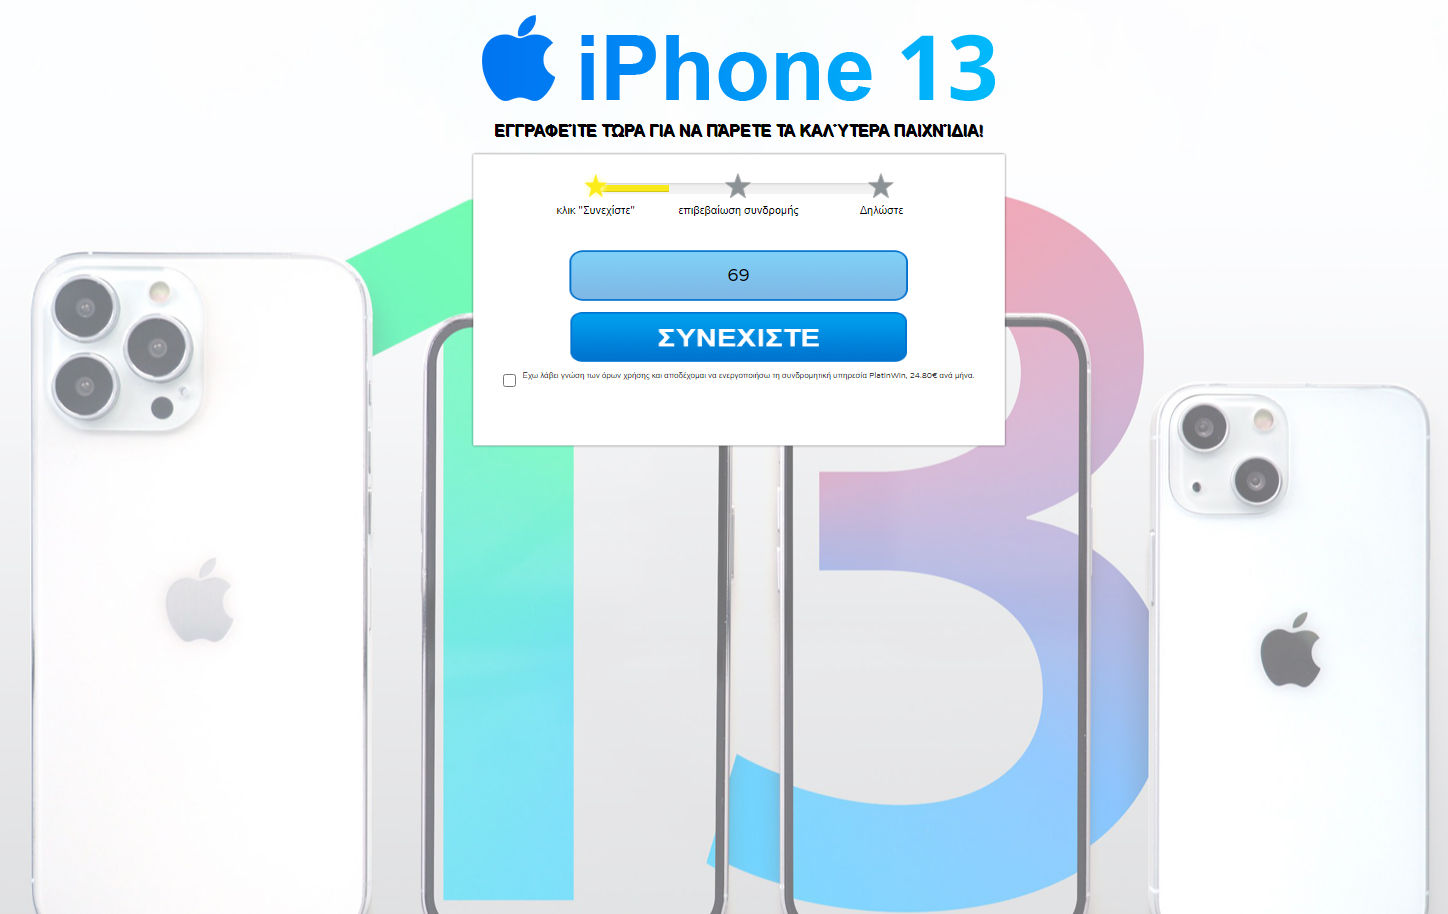 [1-click] GR | Win iPhone 13 Pro